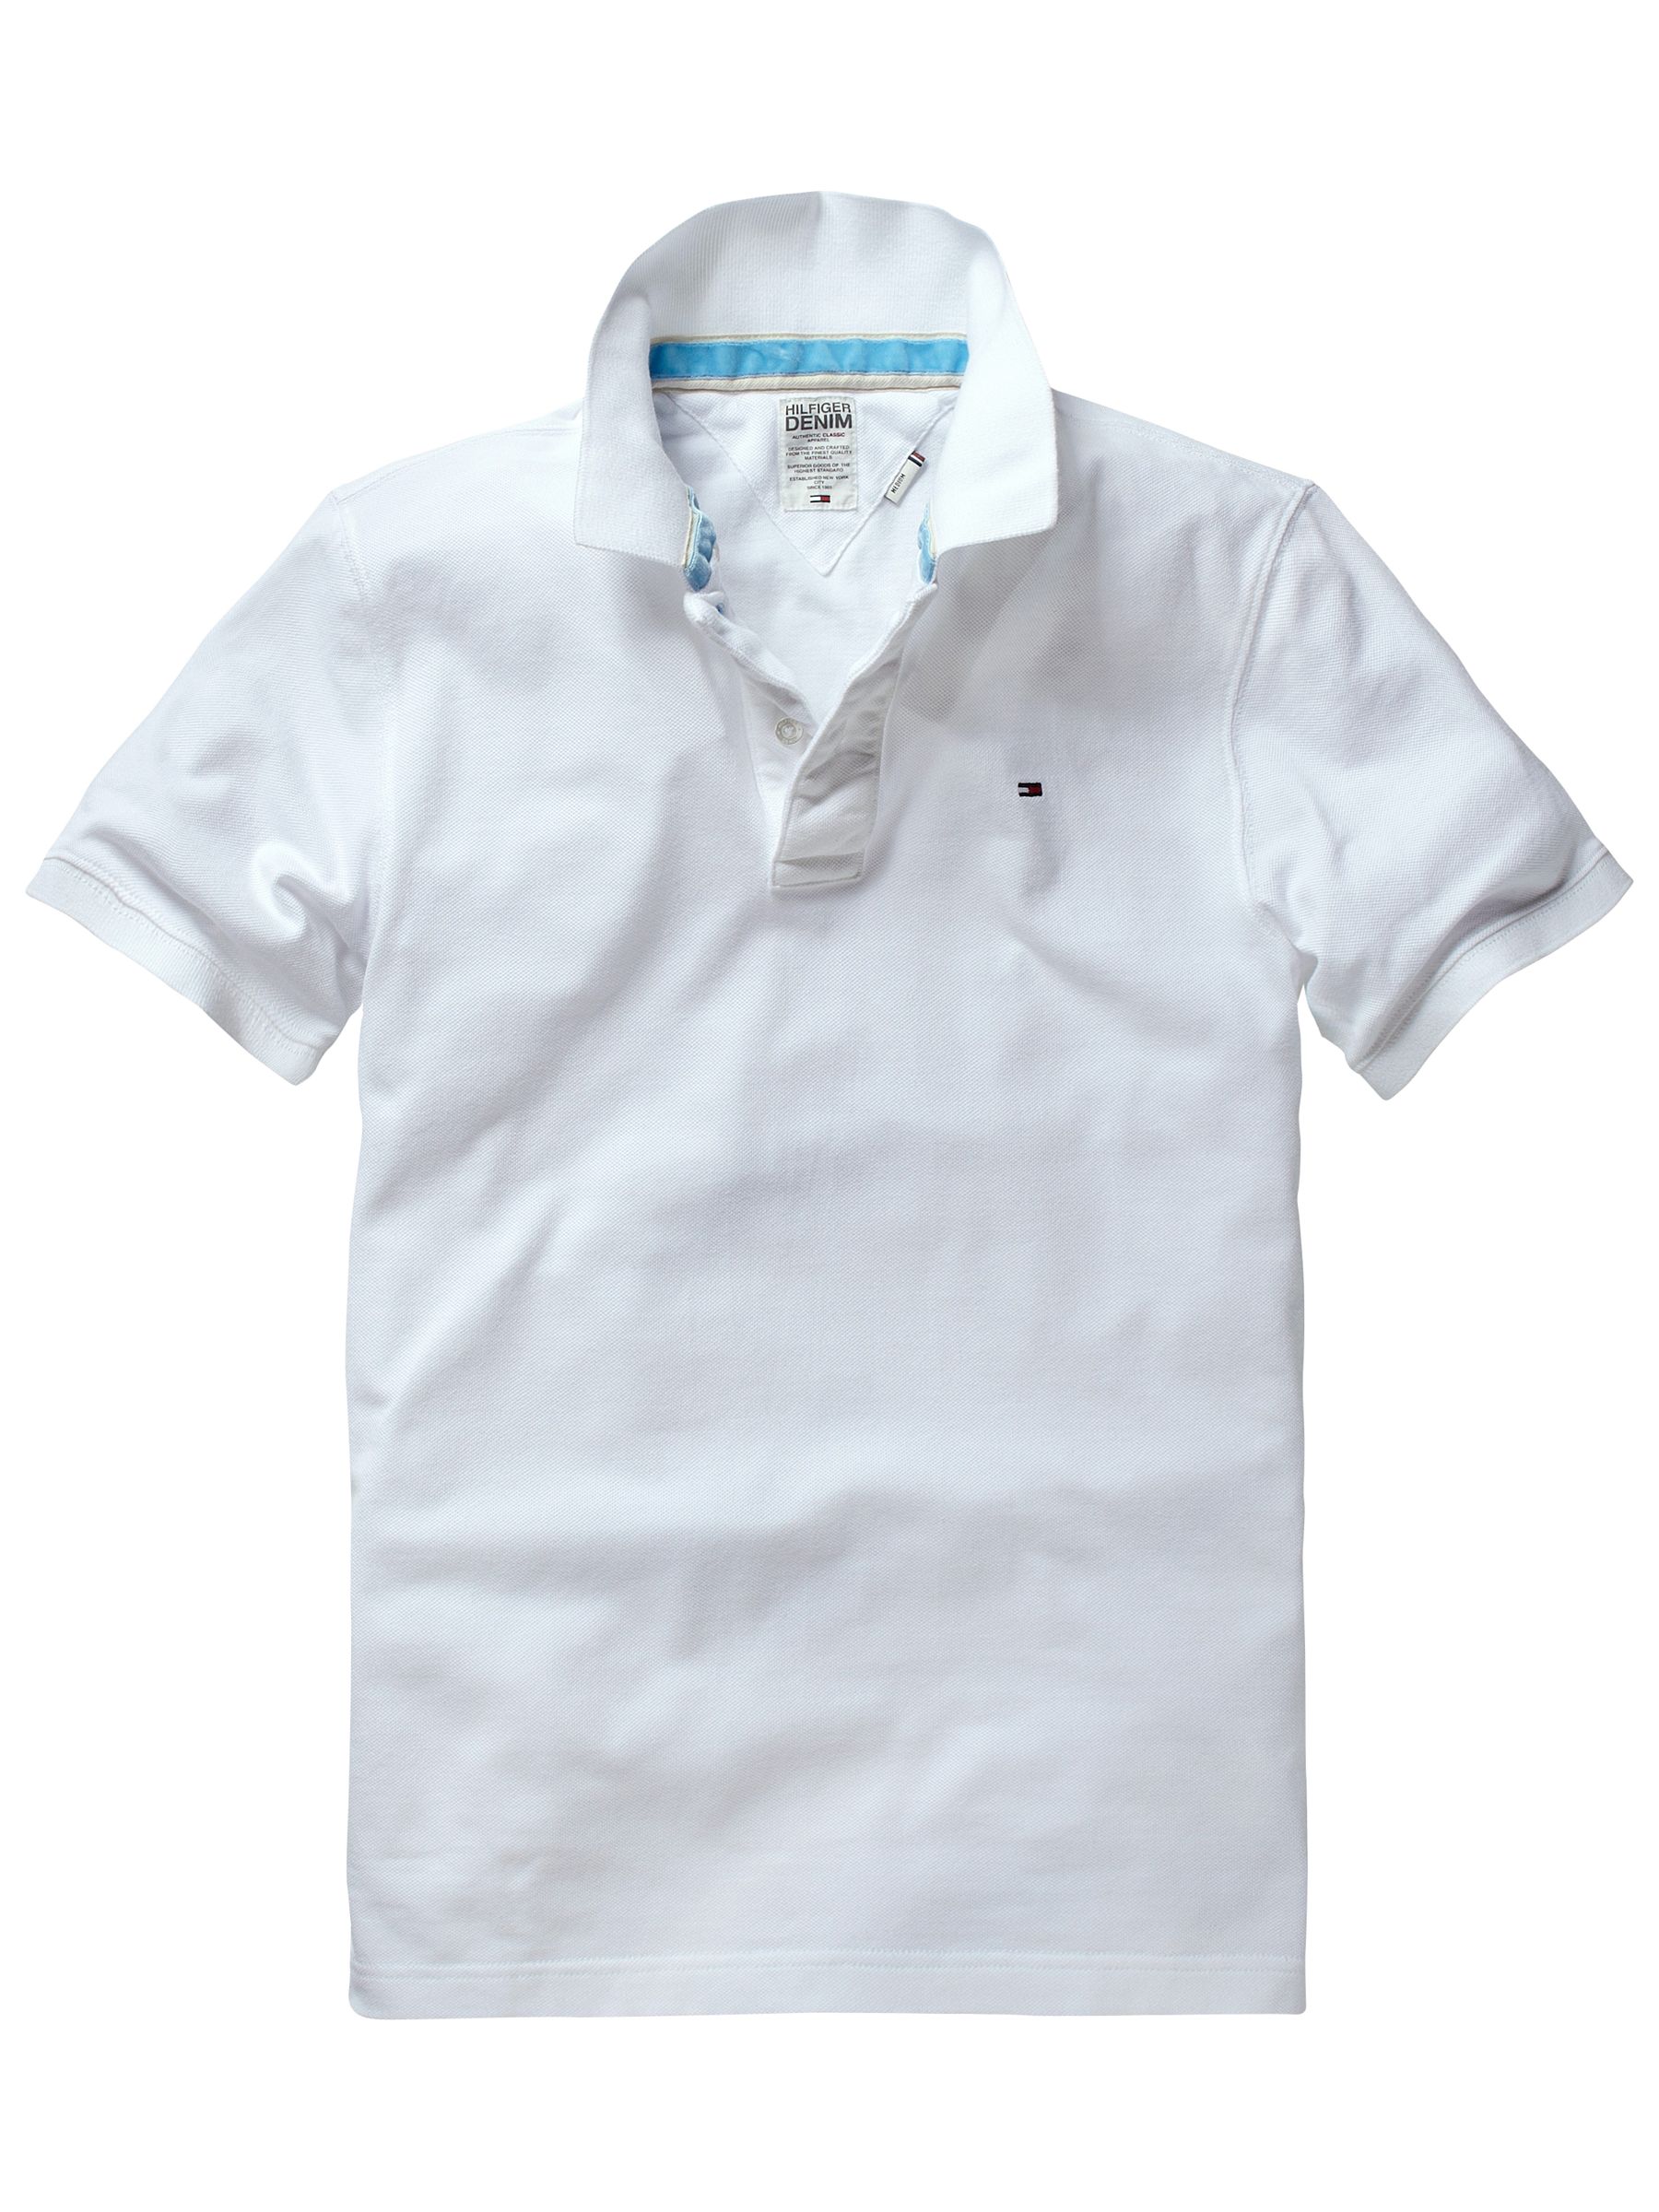 Buy Hilfiger Denim Pilot Flag Polo Shirt, White online at JohnLewis 